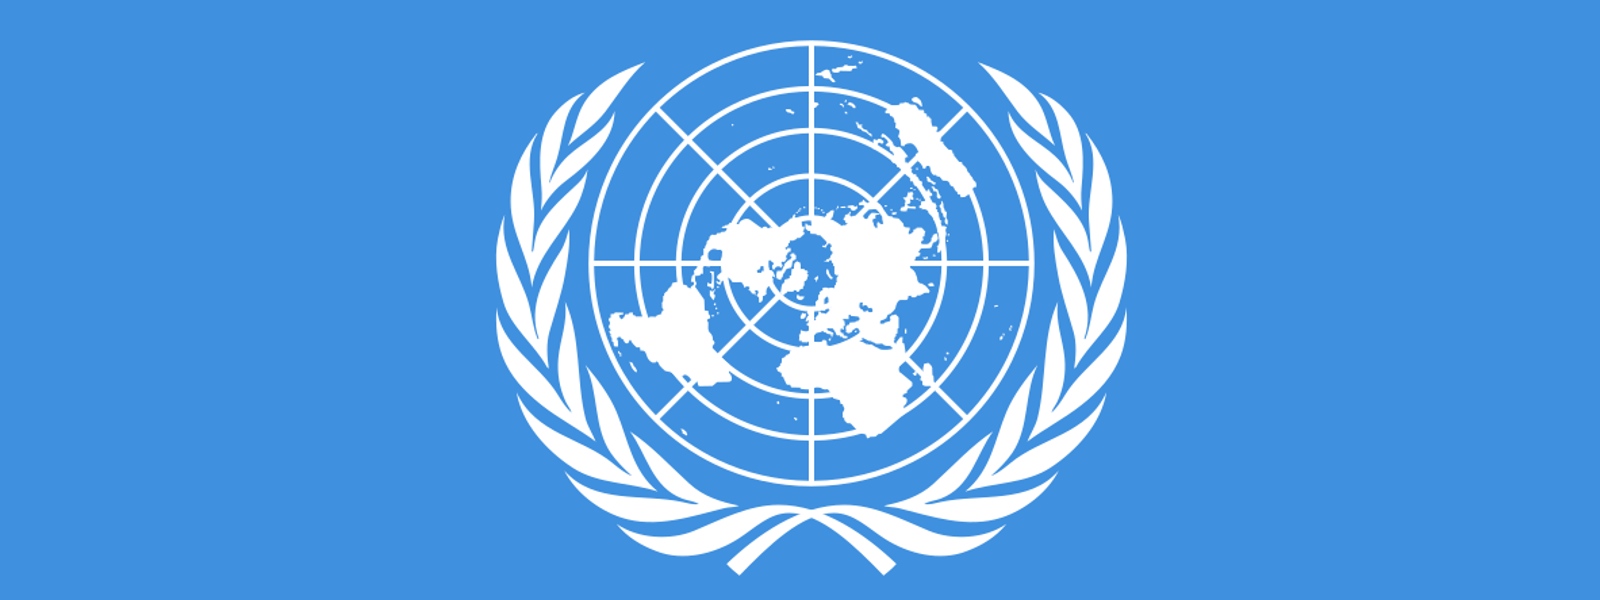 ‘Immediate global attention on Sri Lanka - UN